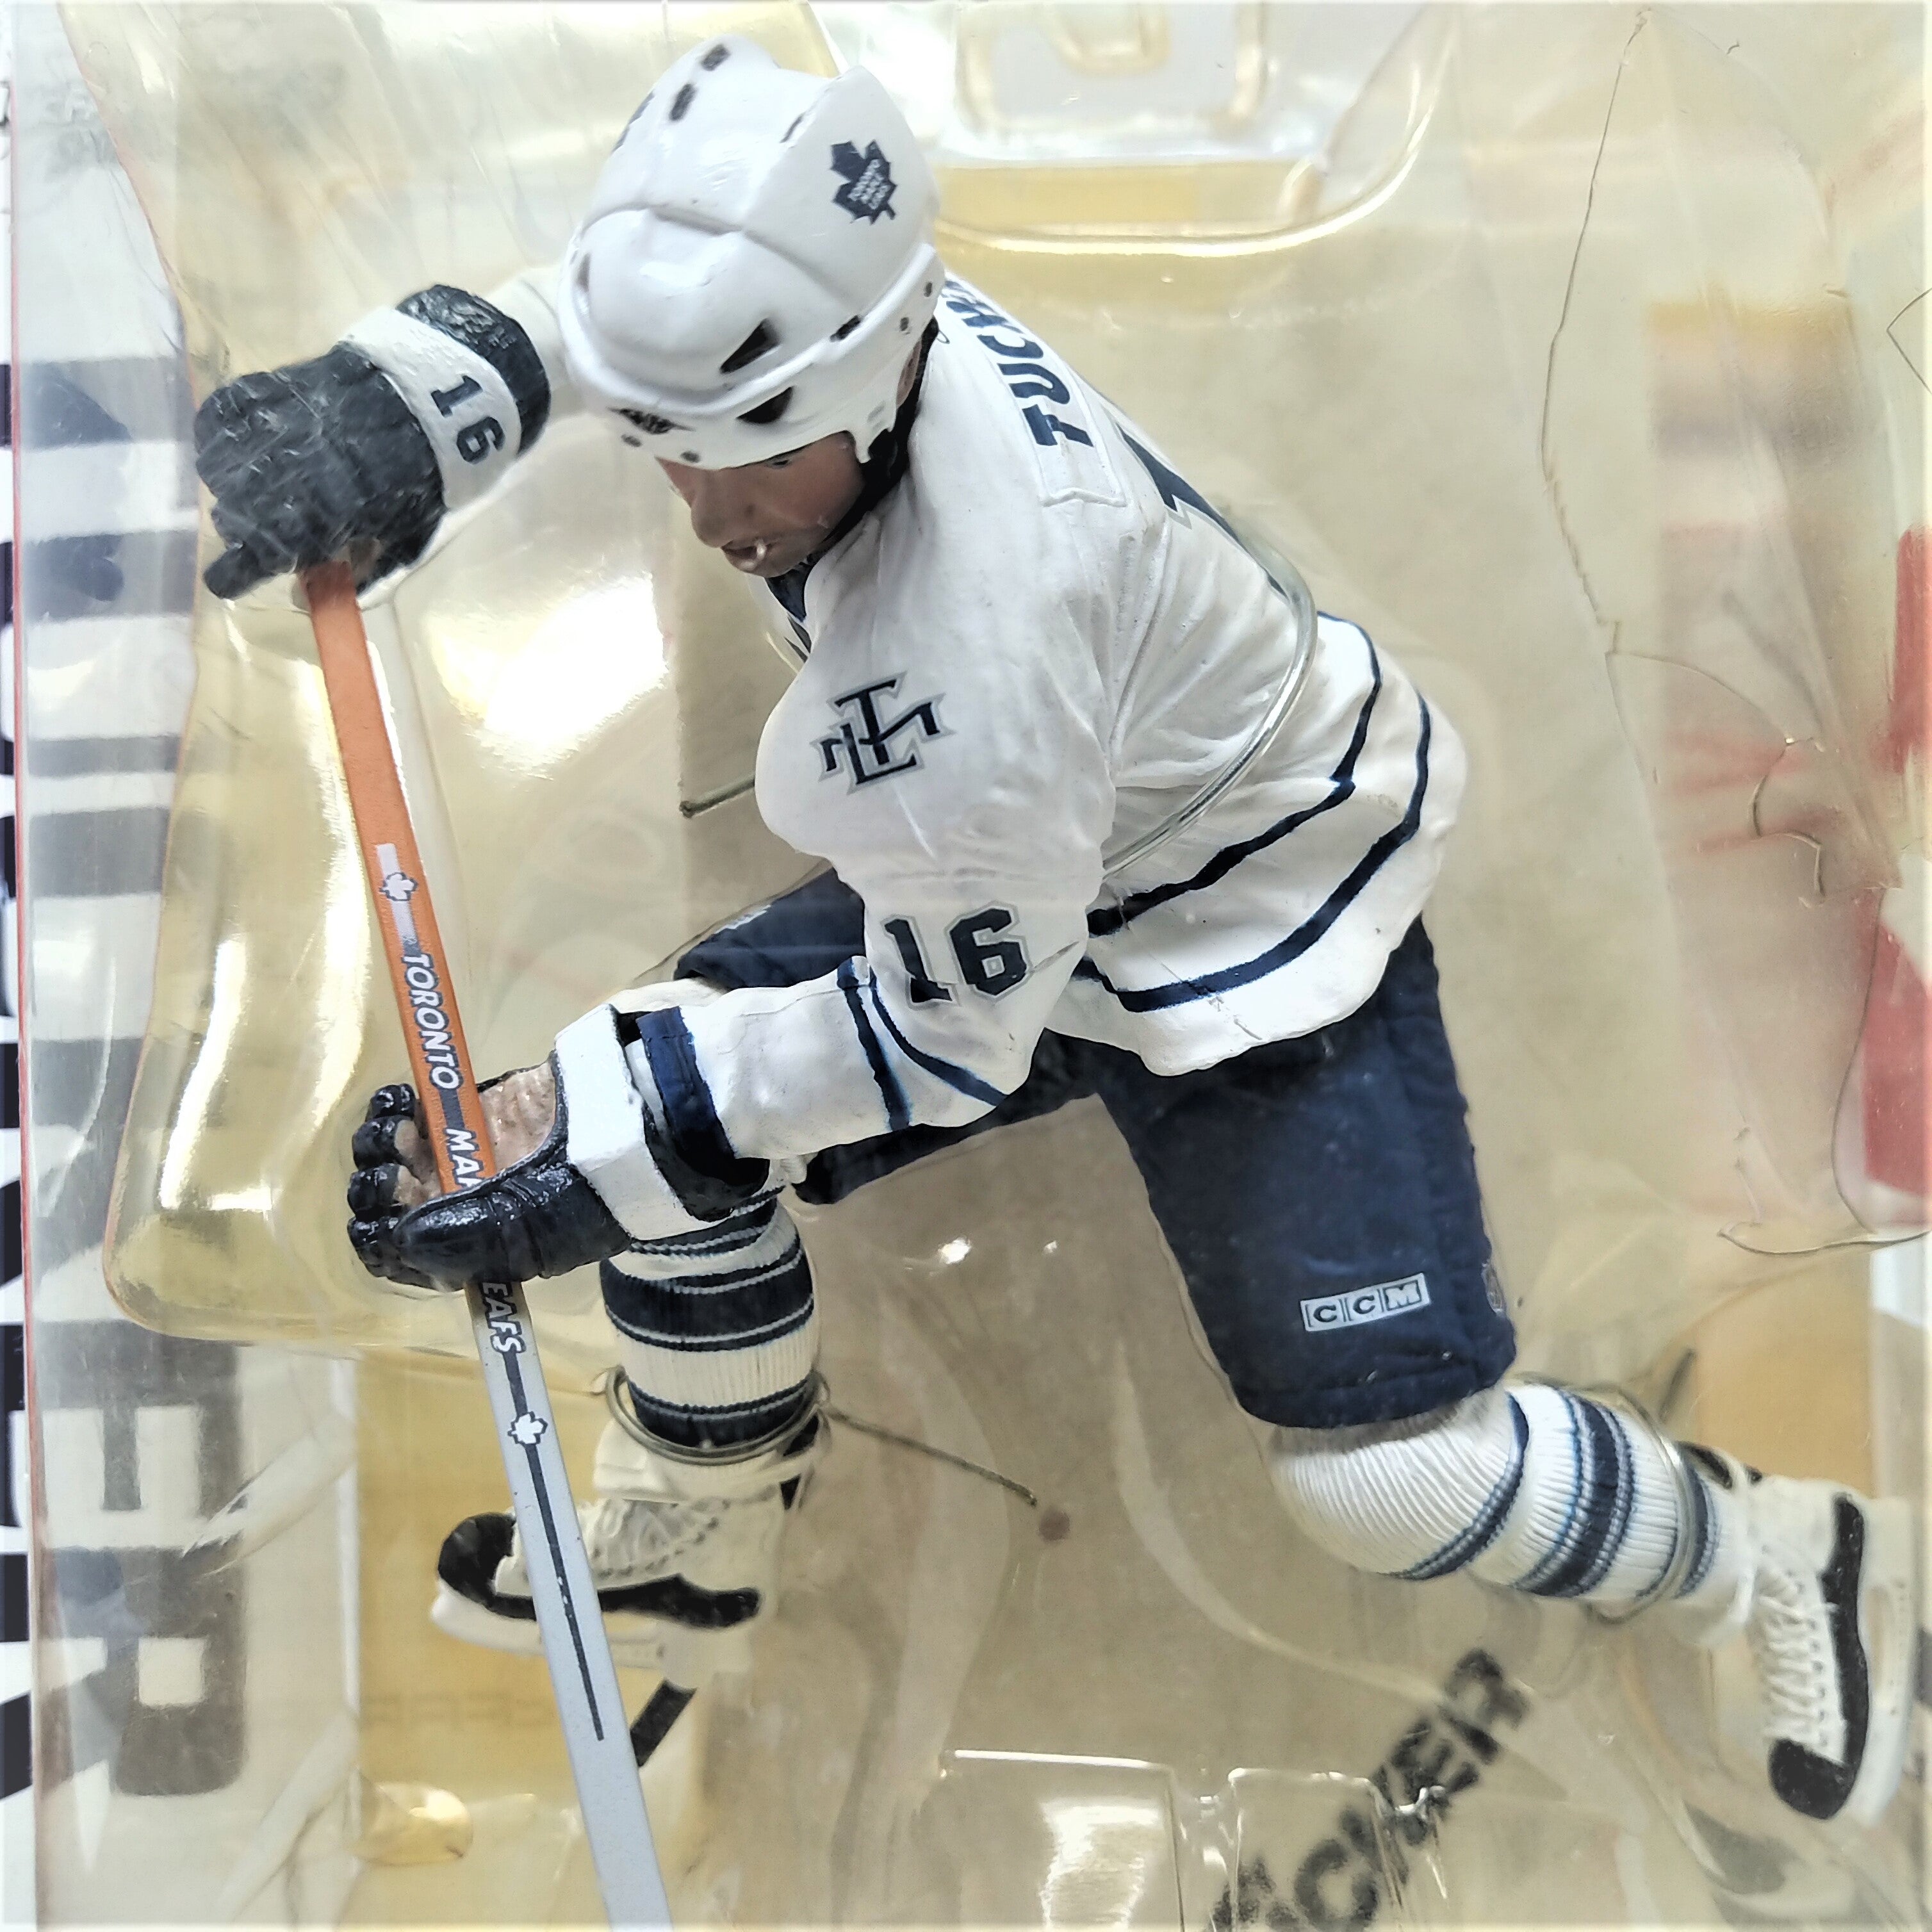 McFarlane Sportpicks Darcy Tucker Toronto Maple Leafs Series 15 6" Player Figurine - Miraj Trading